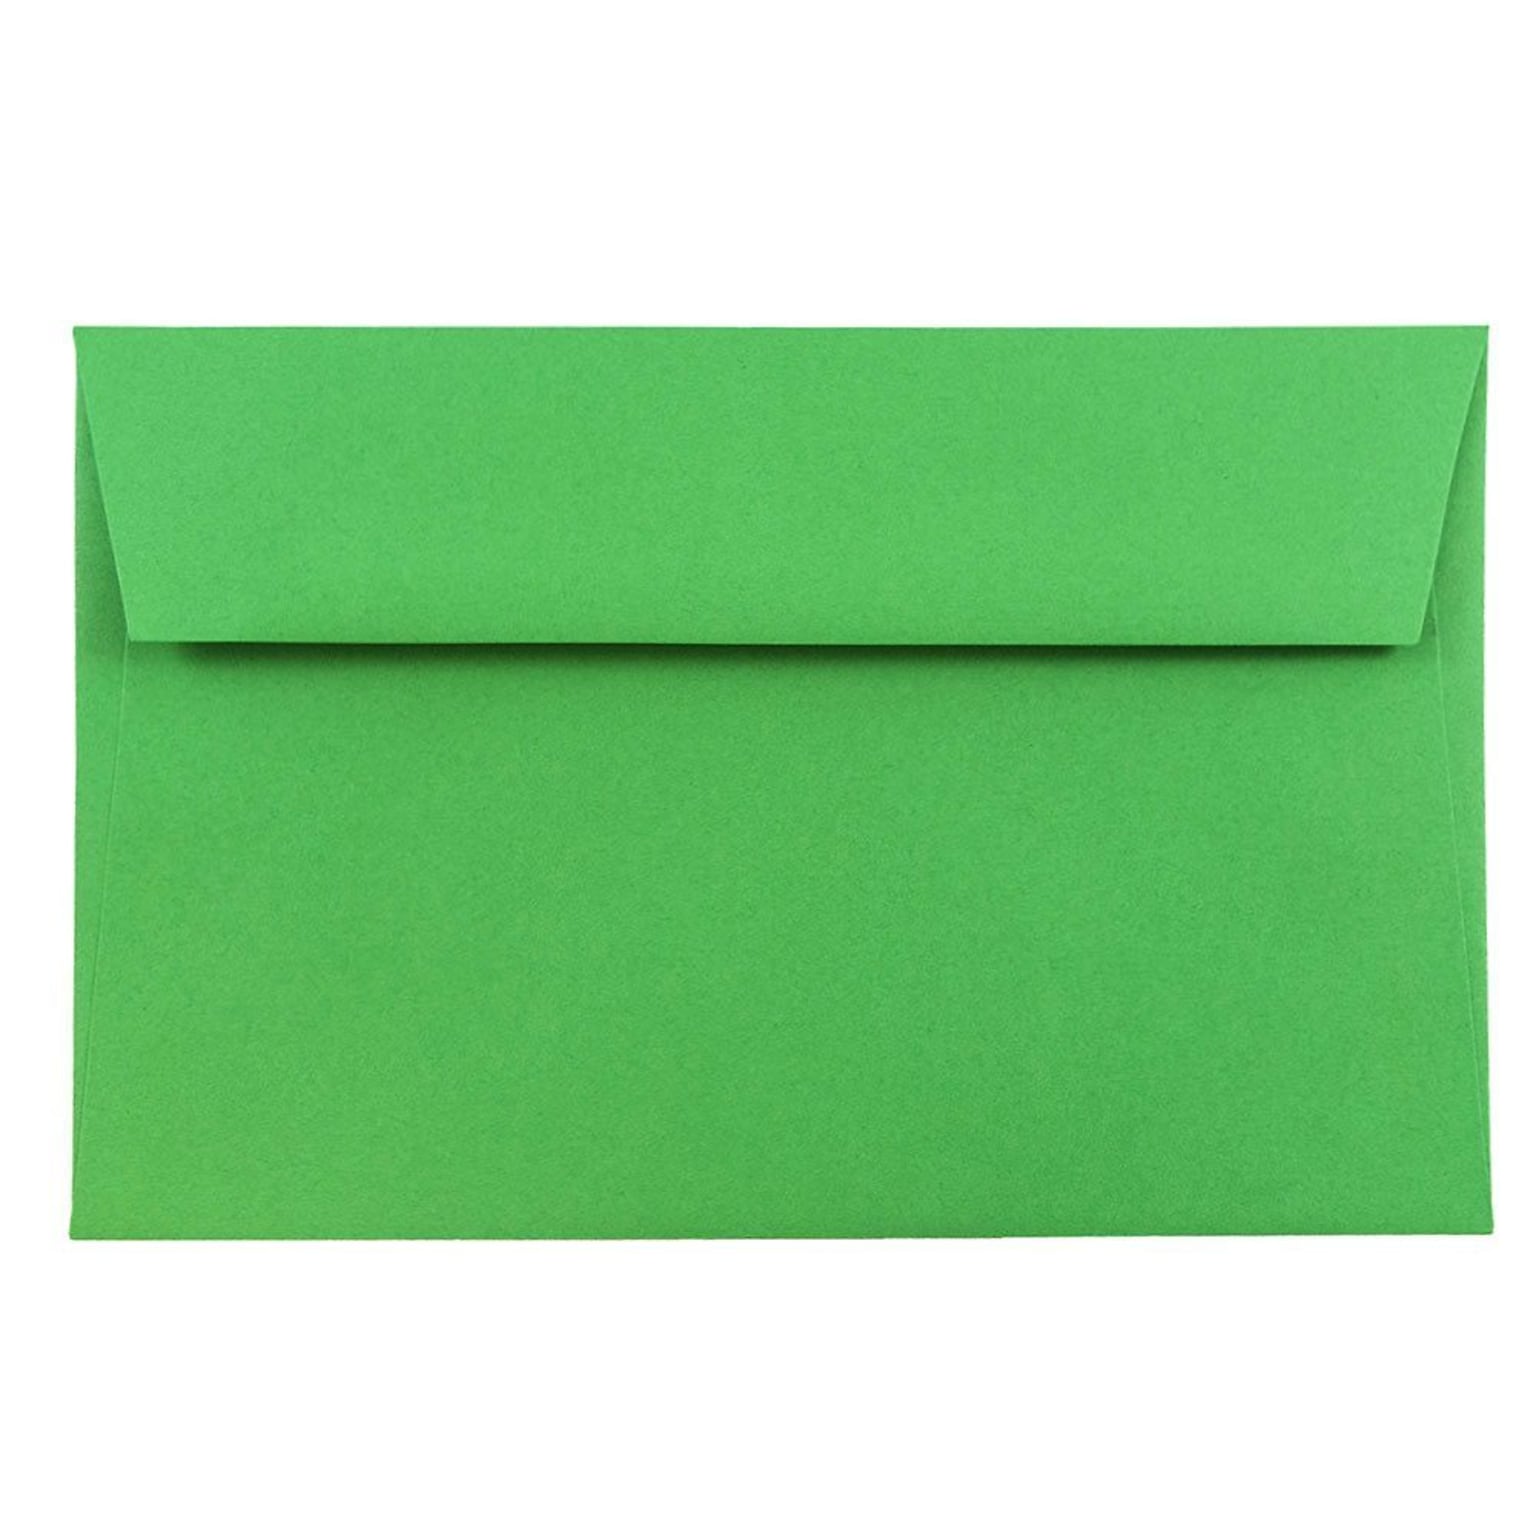 JAM Paper® A9 Colored Invitation Envelopes, 5.75 x 8.75, Green Recycled, Bulk 1000/Carton (98176B)